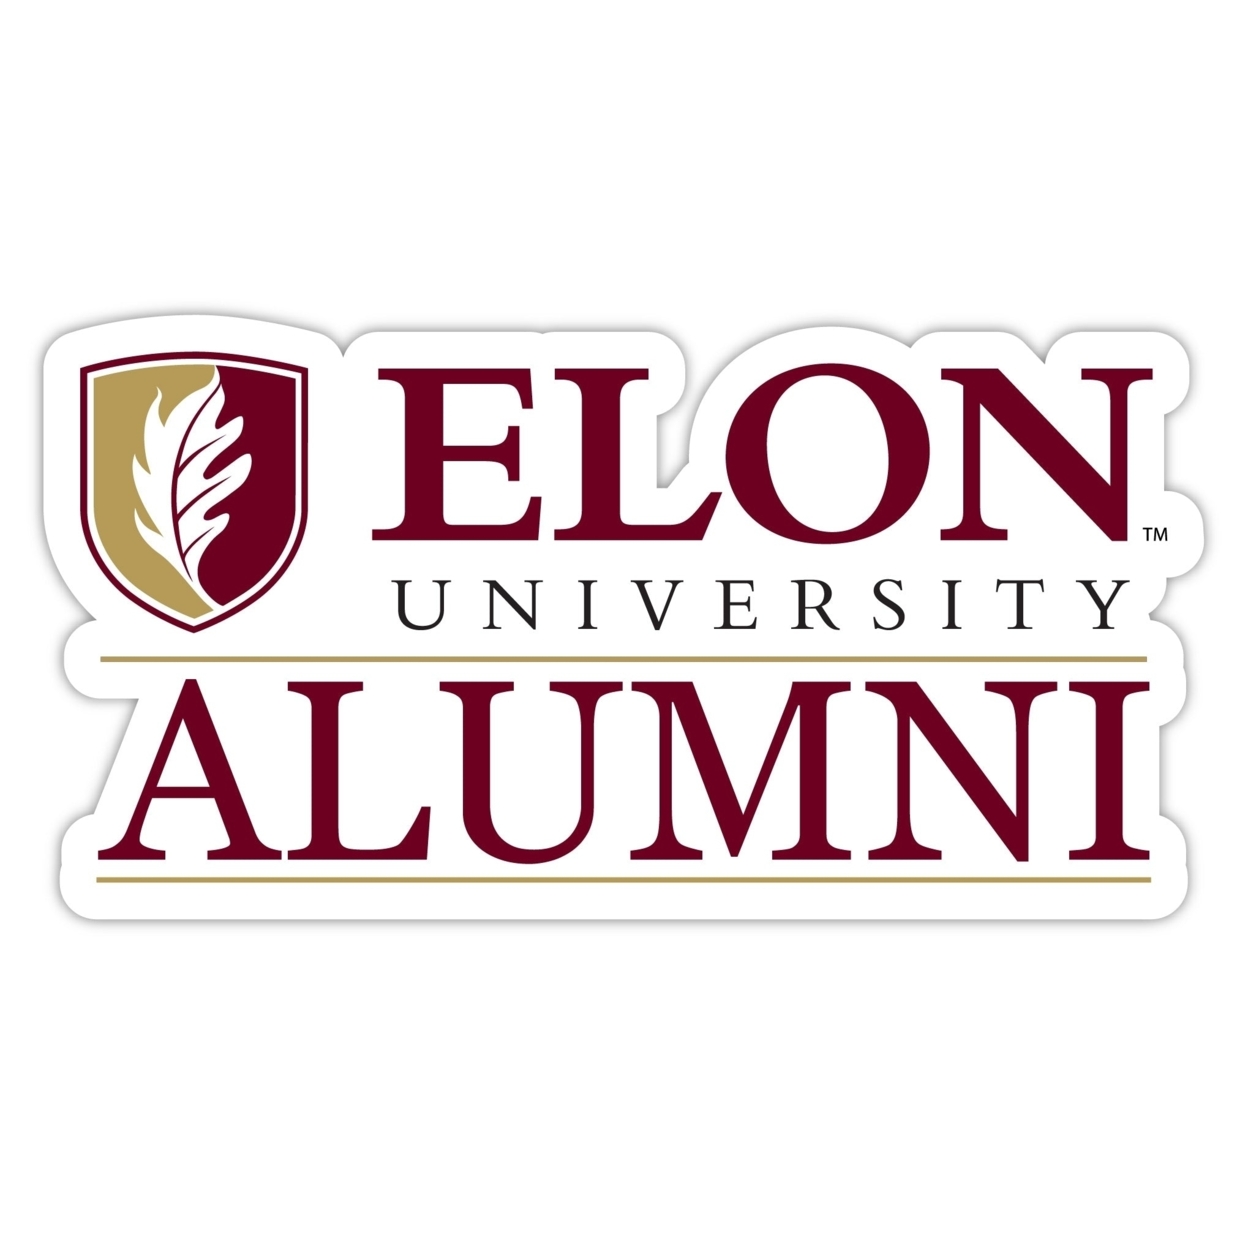 Elon University Alumni 4 Sticker